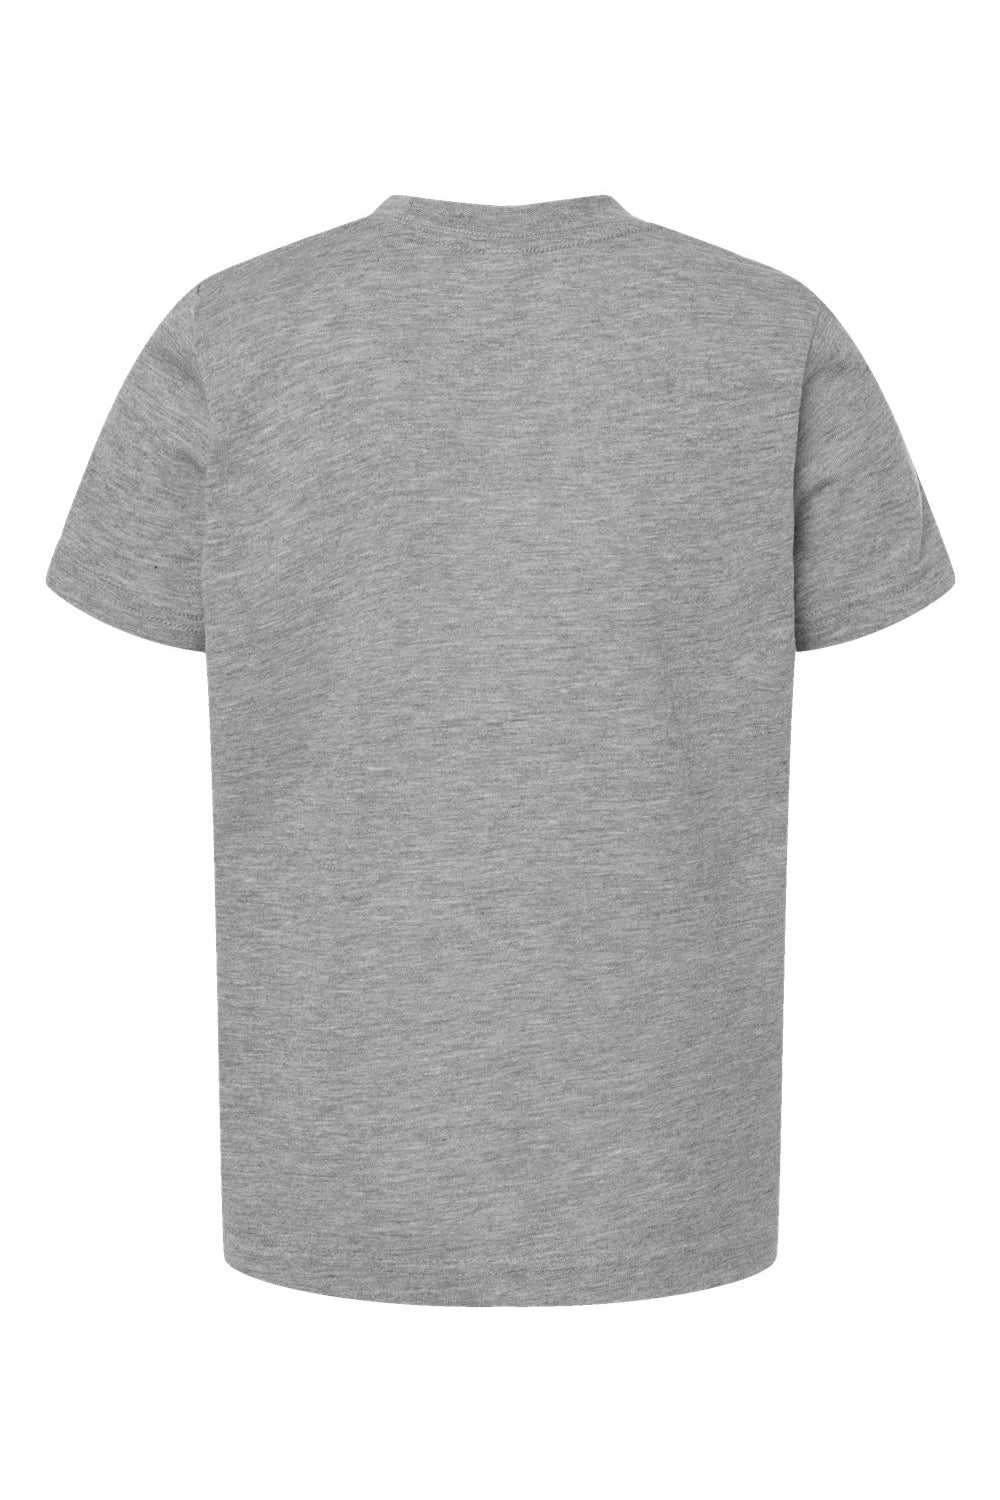 Tultex 265 Youth Poly-Rich Short Sleeve Crewneck T-Shirt Heather Grey Flat Back